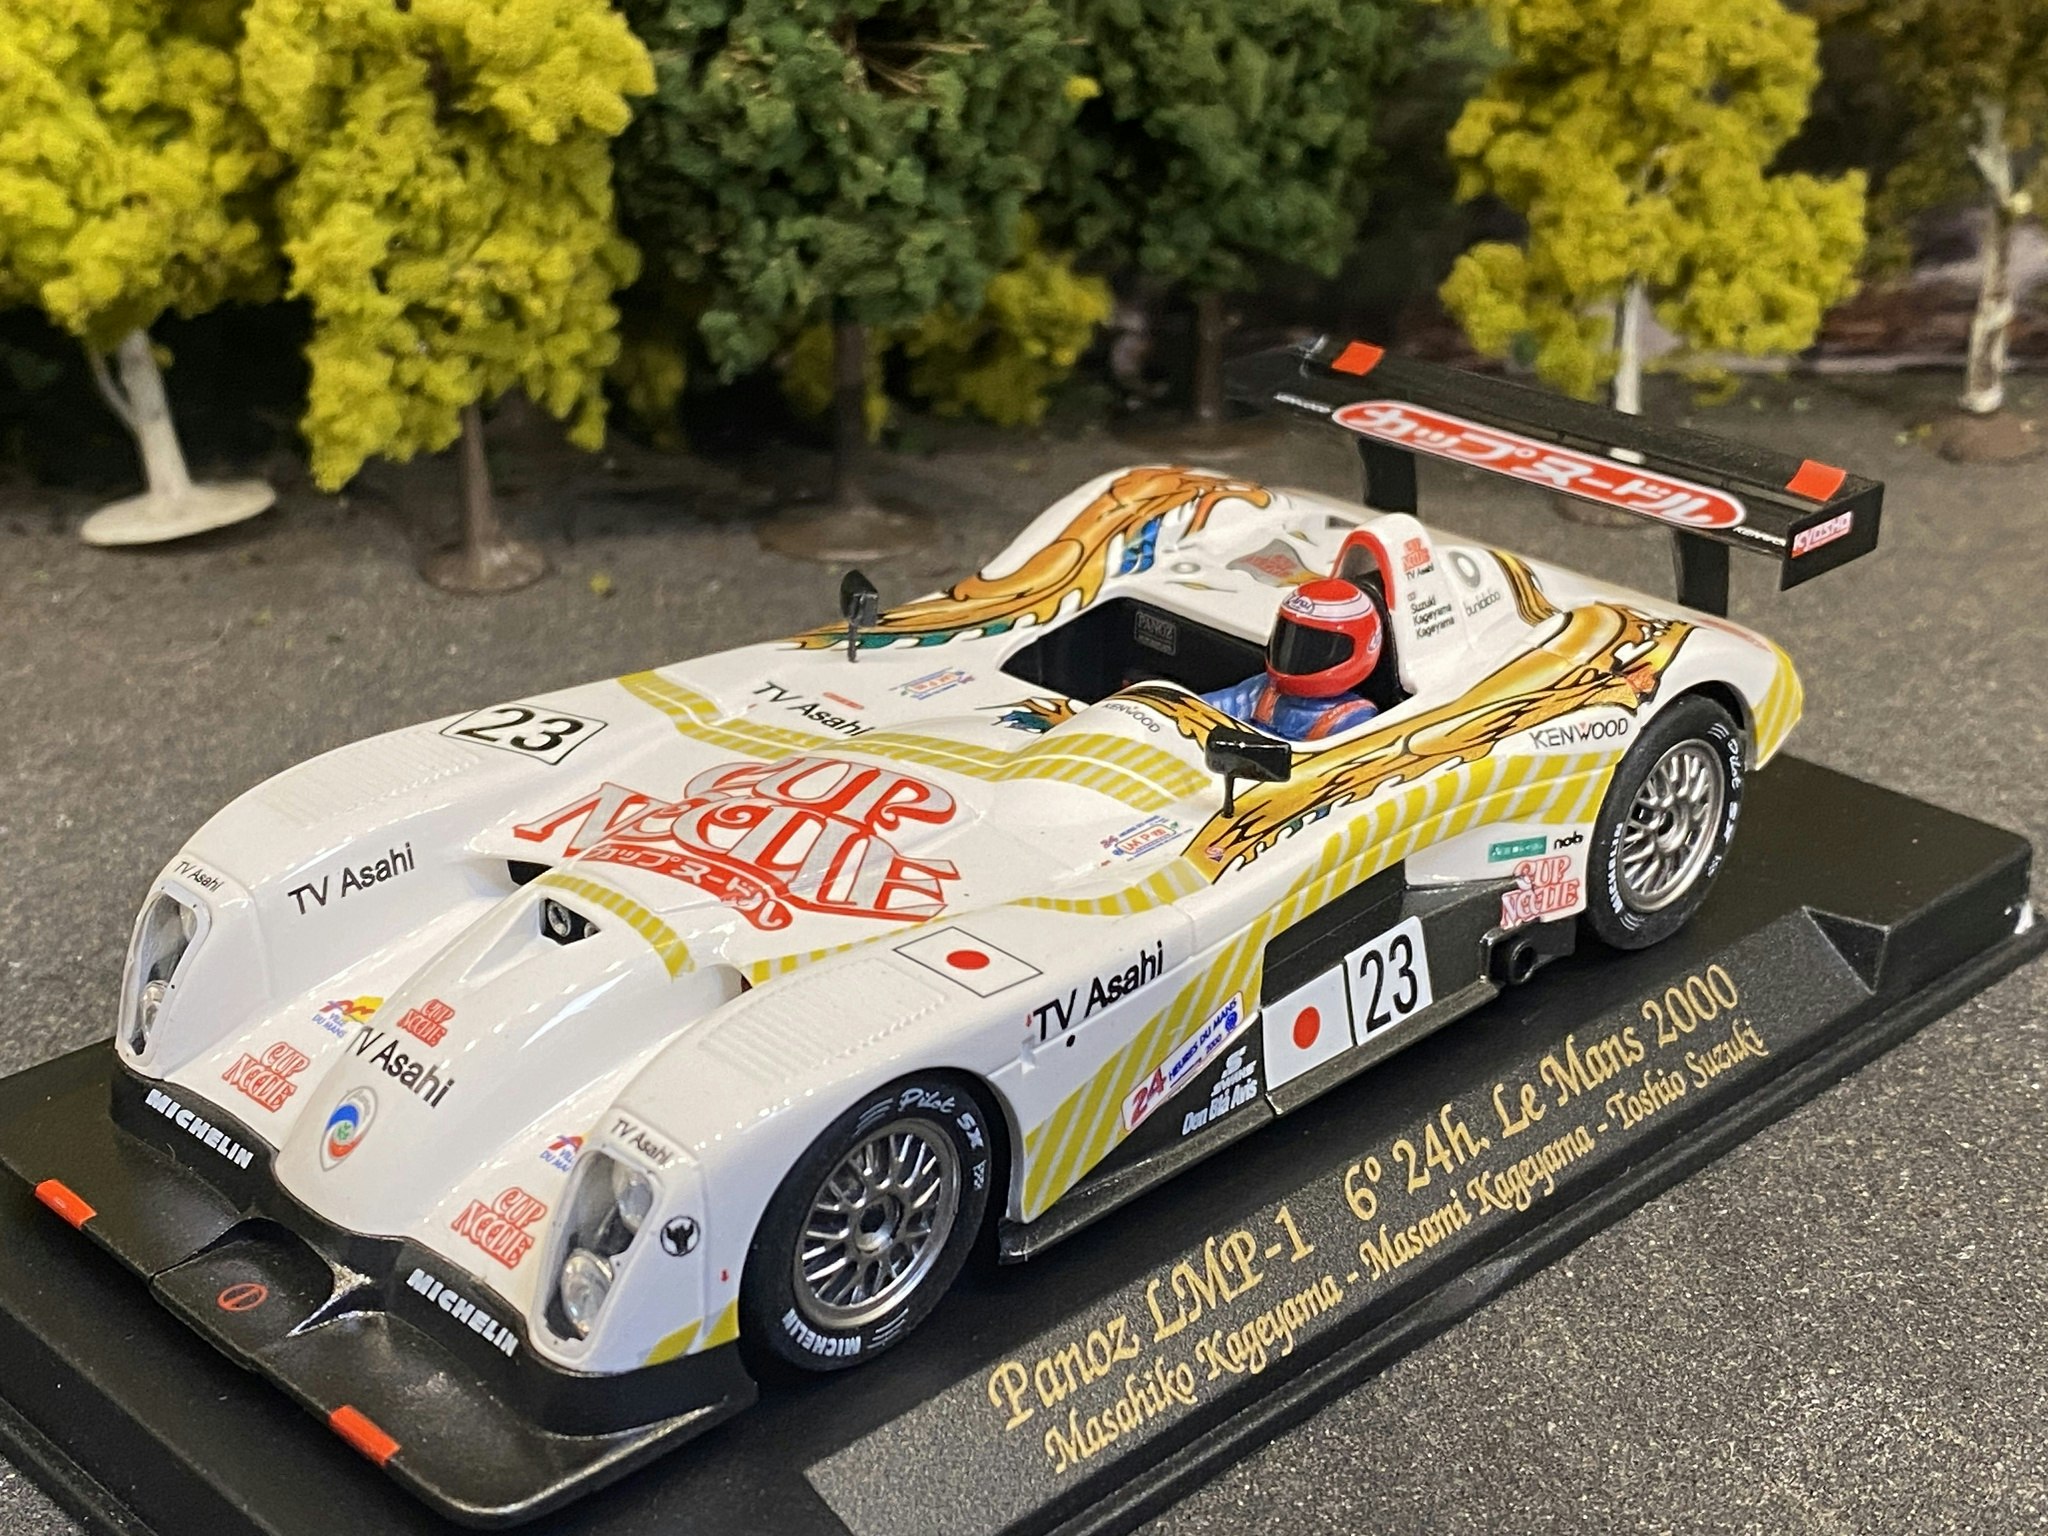 Scale 1/32 Analogue FLY slotcar: Panoz LMP-1 #23 Le Mans 2000